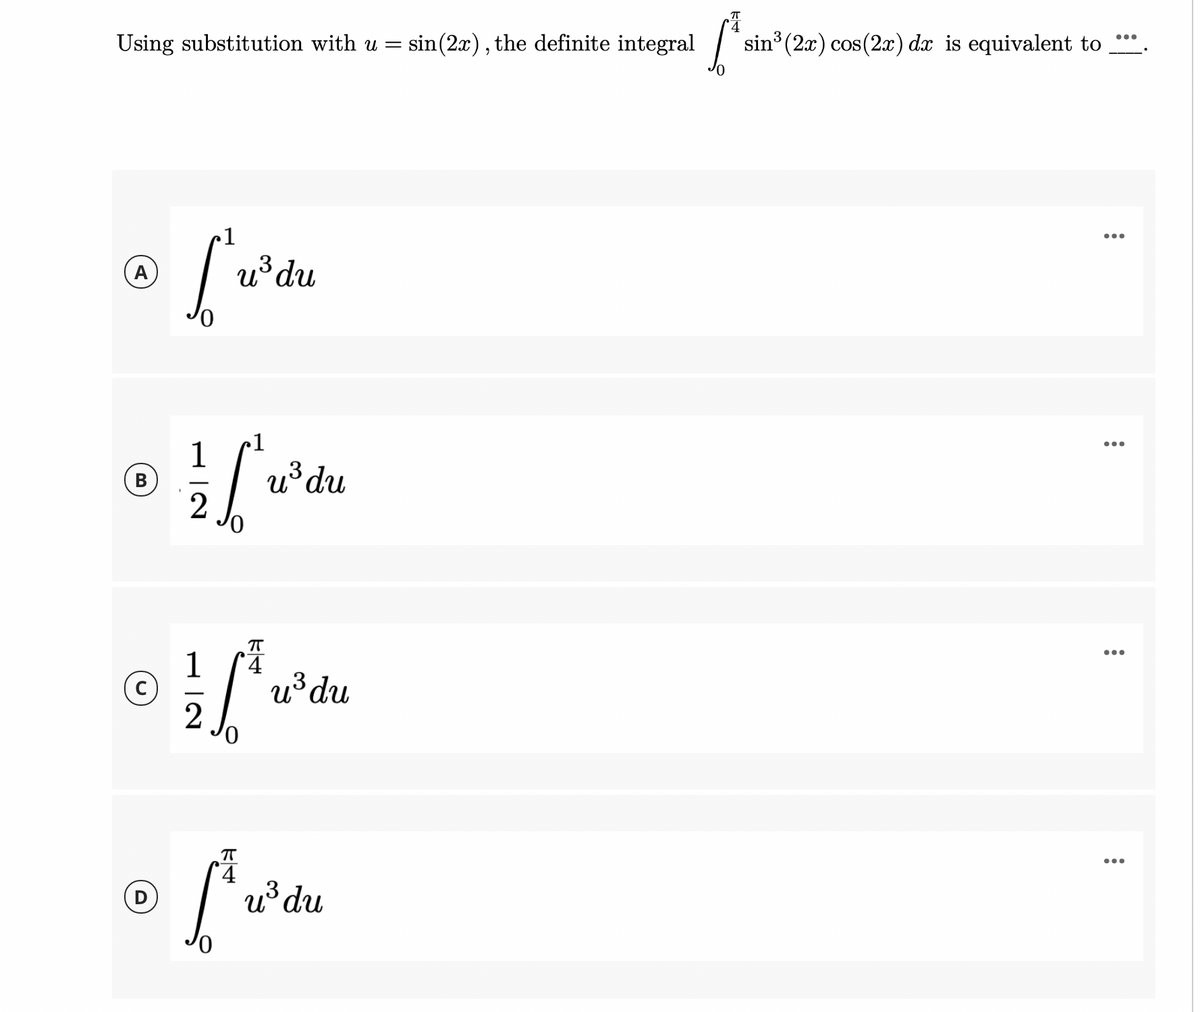 4
Using substitution with u =
sin(2x), the definite integral
sin (2x) cos(2x) dx is equivalent to
...
1
...
A
u³du
1
u³du
2
...
В
u³du
2
T
...
(D
u³ du
